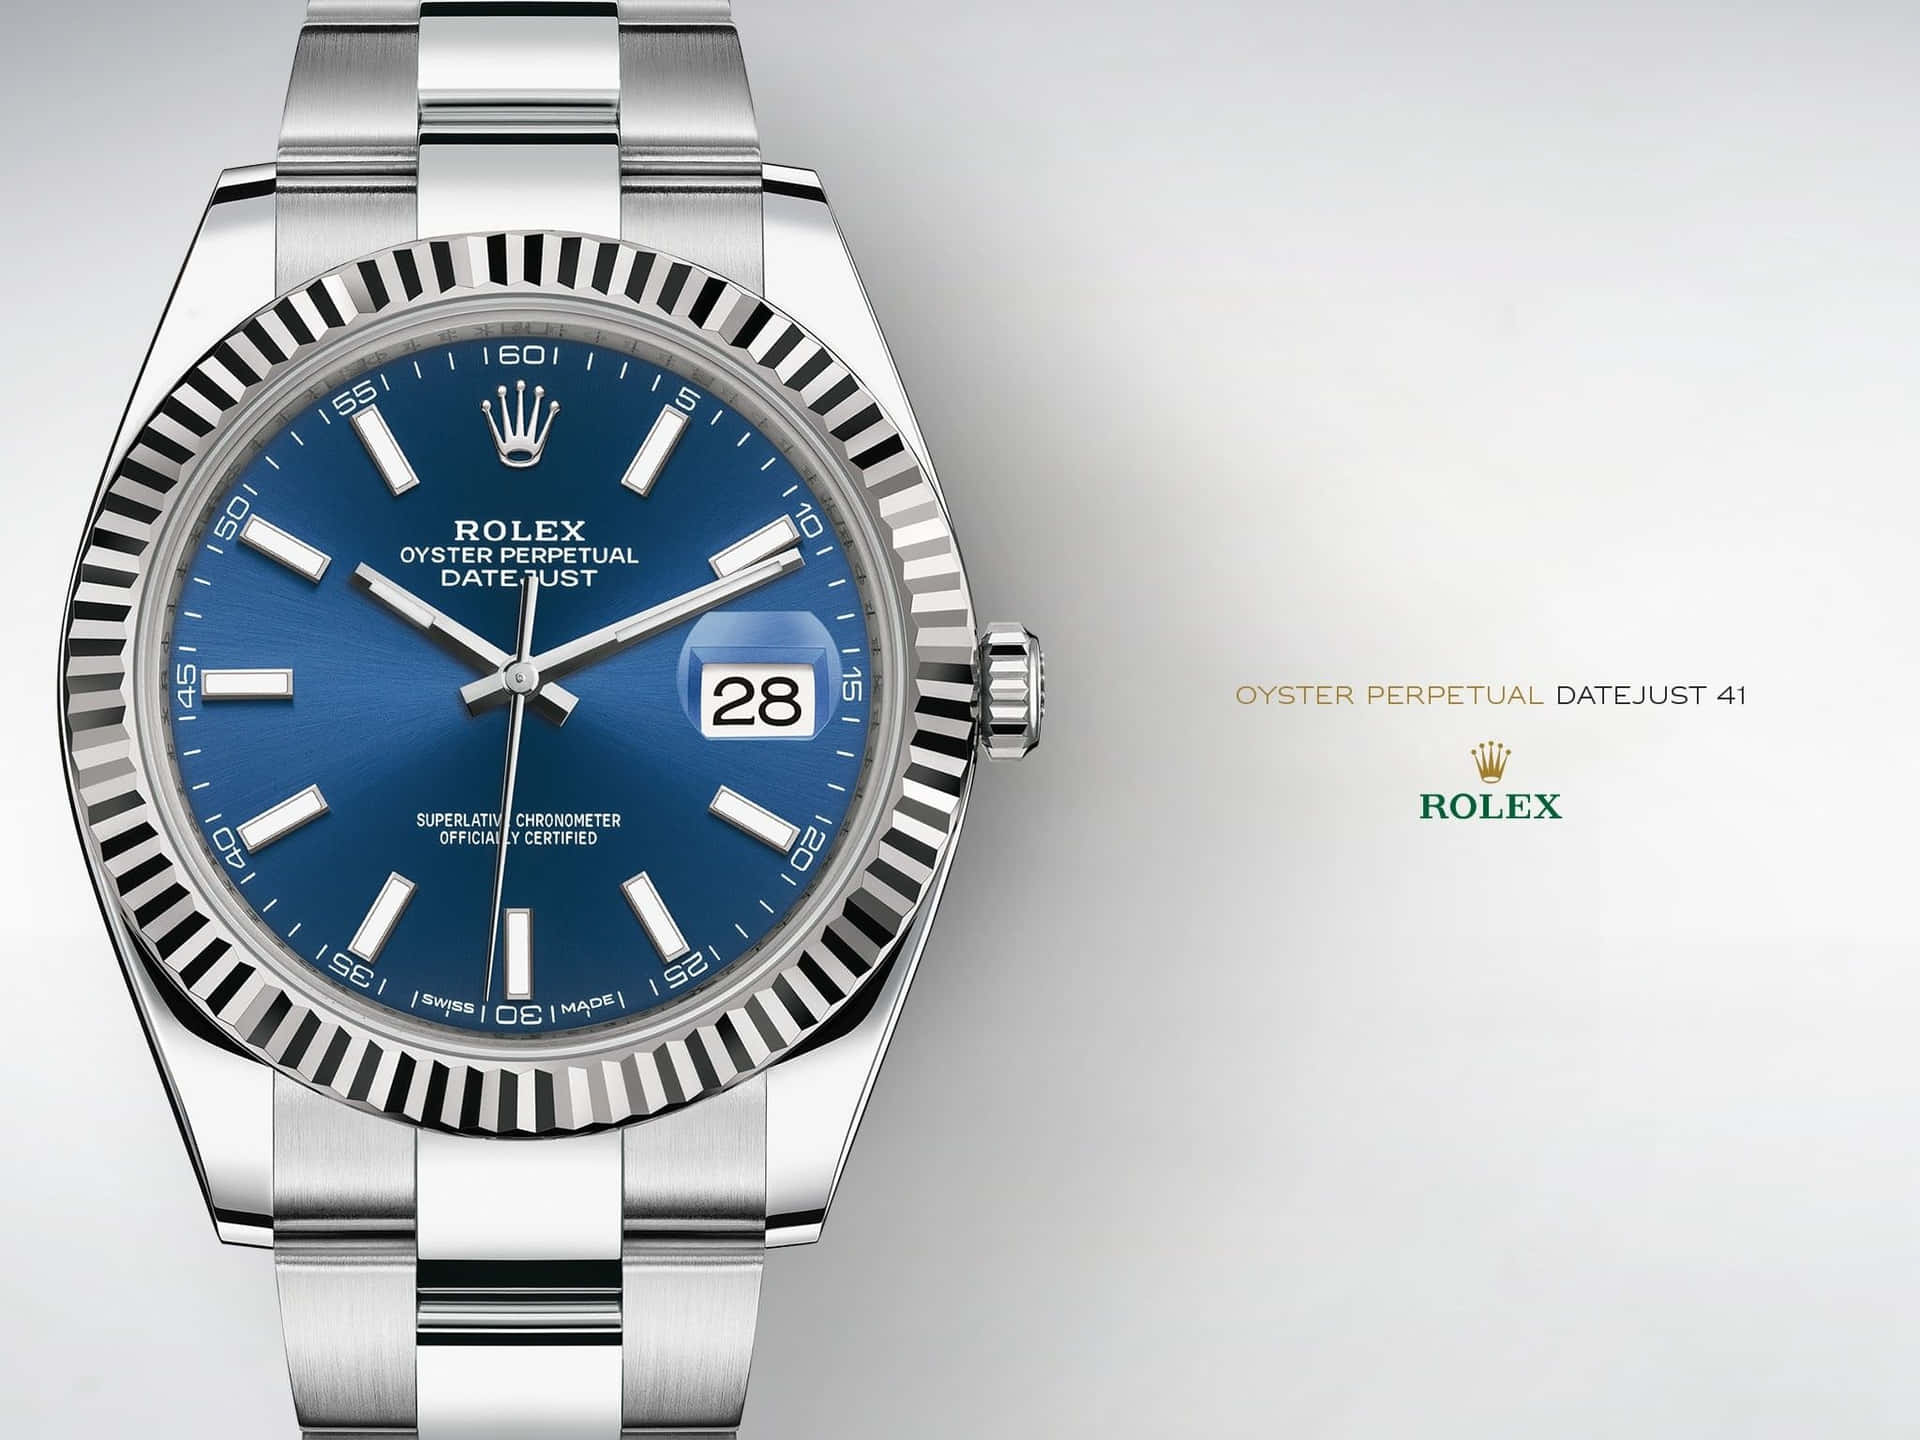 Rolex Oyster Perpetual Watch Wallpaper